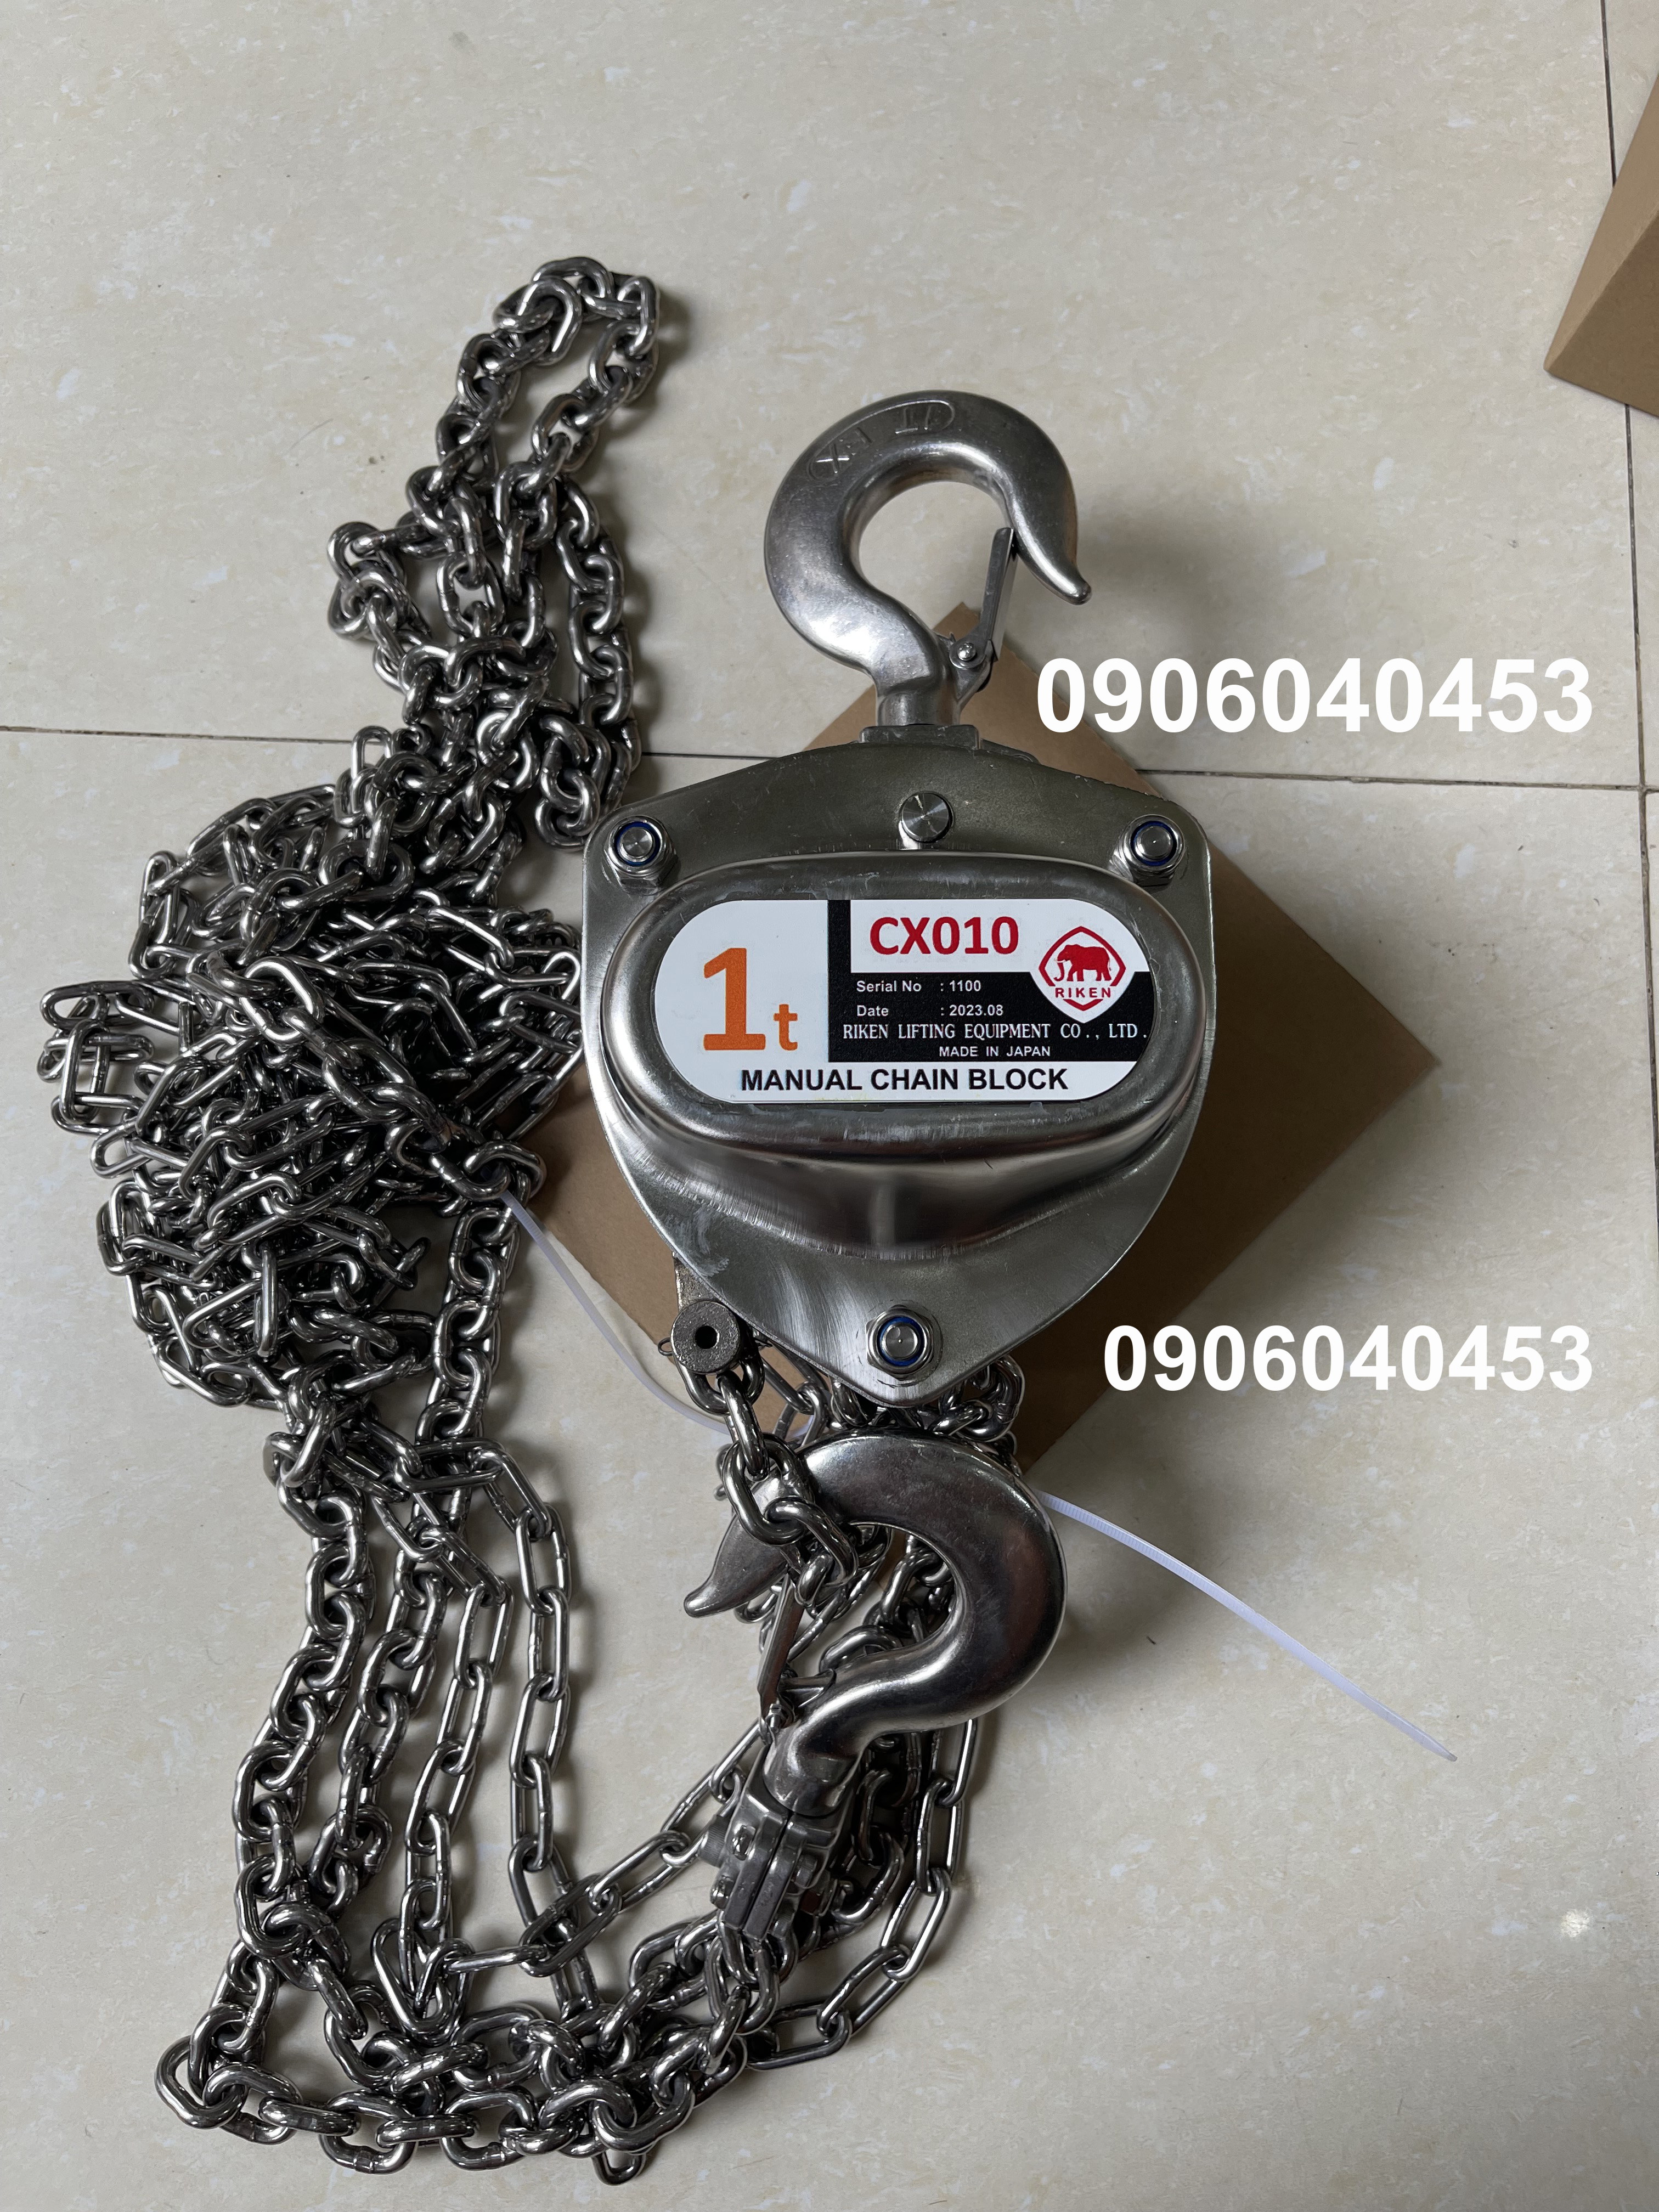 Pa lăng kéo tay inox 304 Riken 1 tấn CX010/ 1 ton stainless steel chain hoist CX010